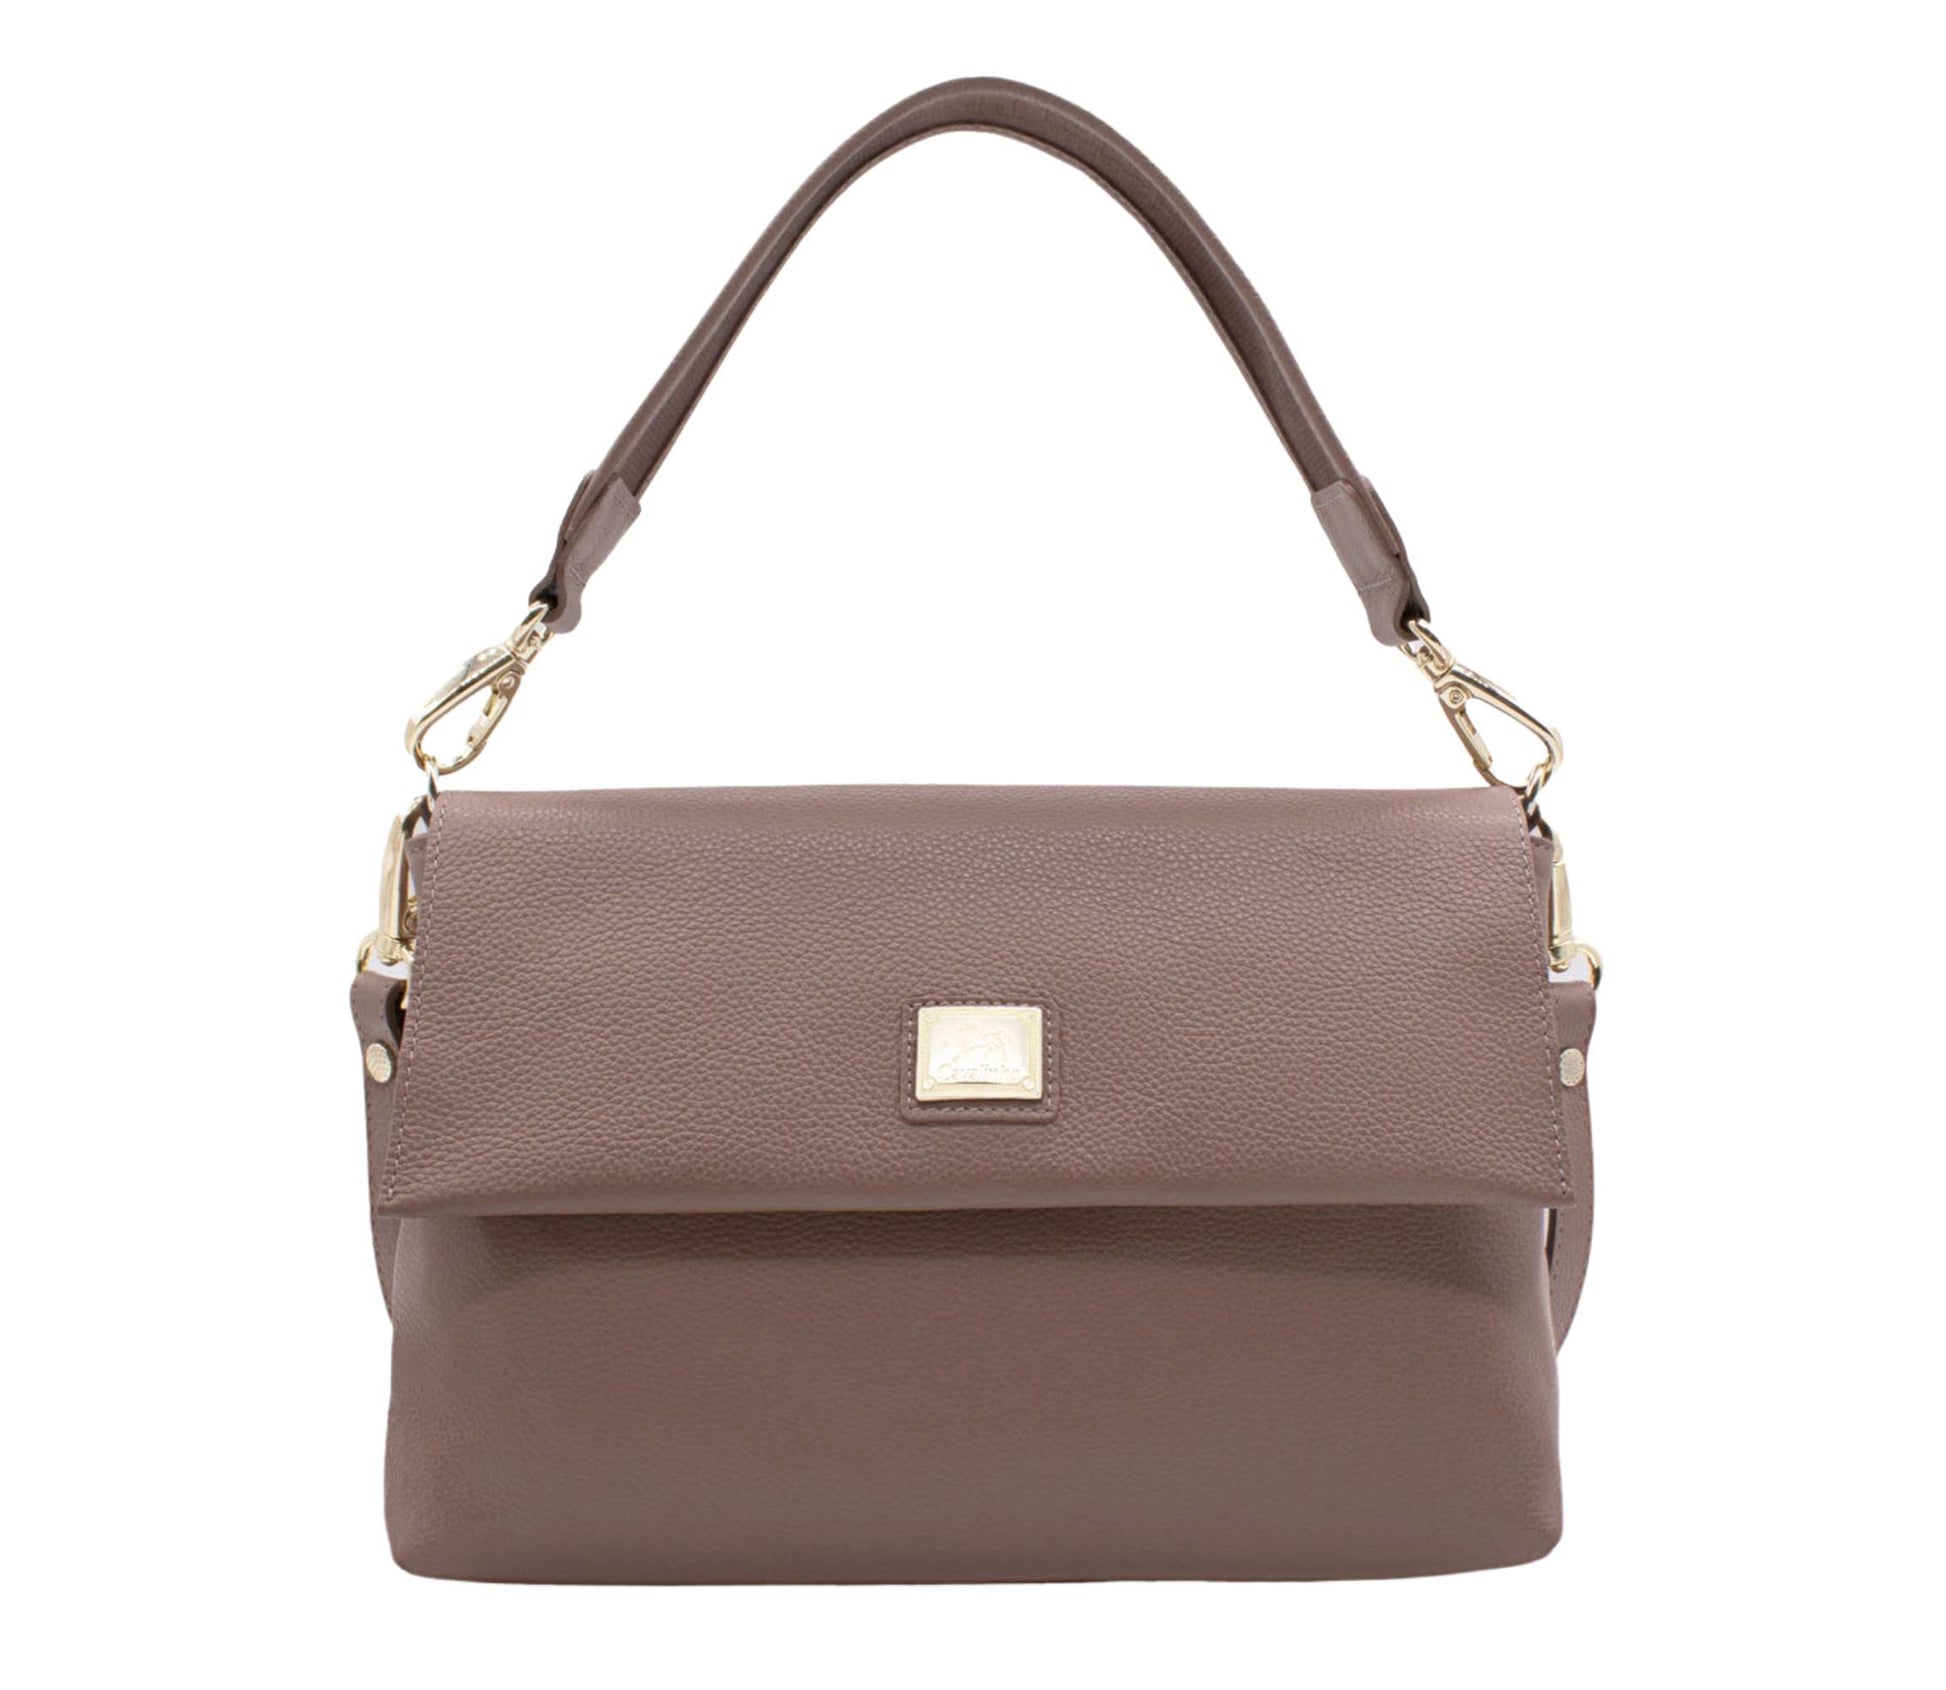 #color_ Sand | Cavalinho Muse 3 in 1: Leather Clutch, Handbag or Crossbody Bag - Sand - 18300509.07.99